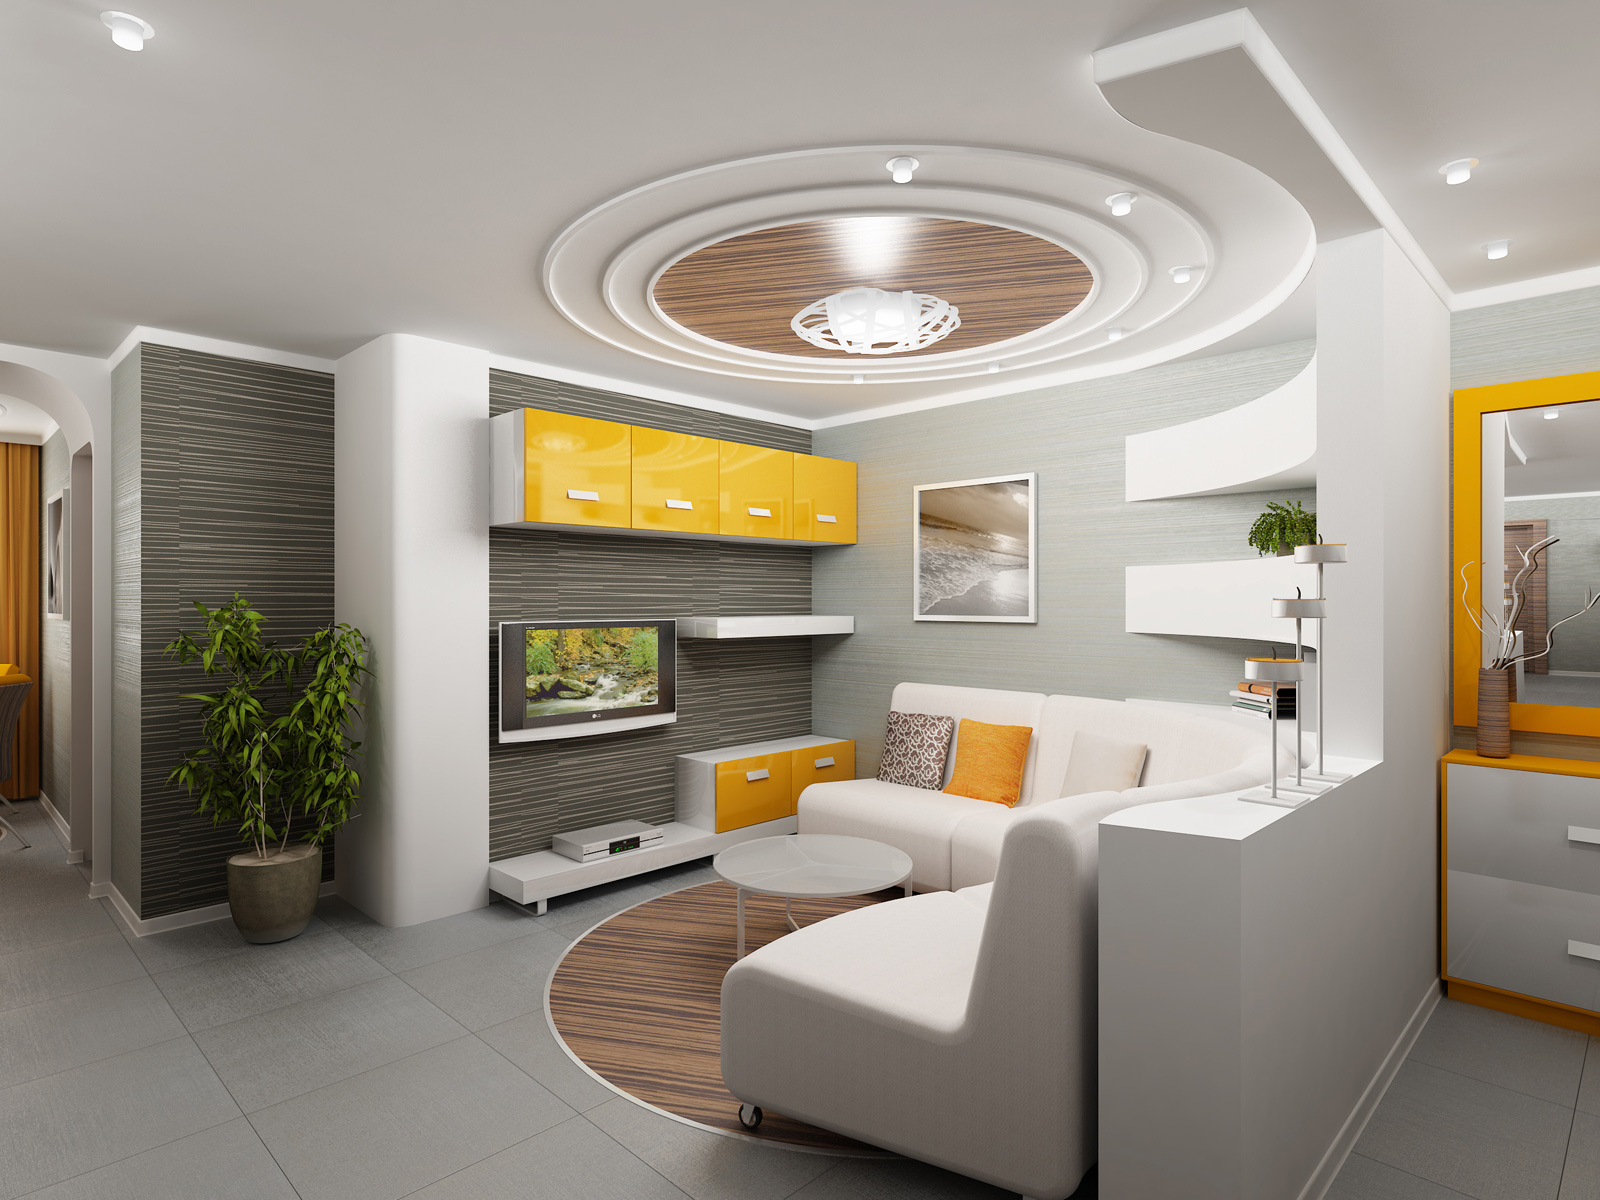 Modern Round False Ceiling Designs For Small Modern Living Room1 